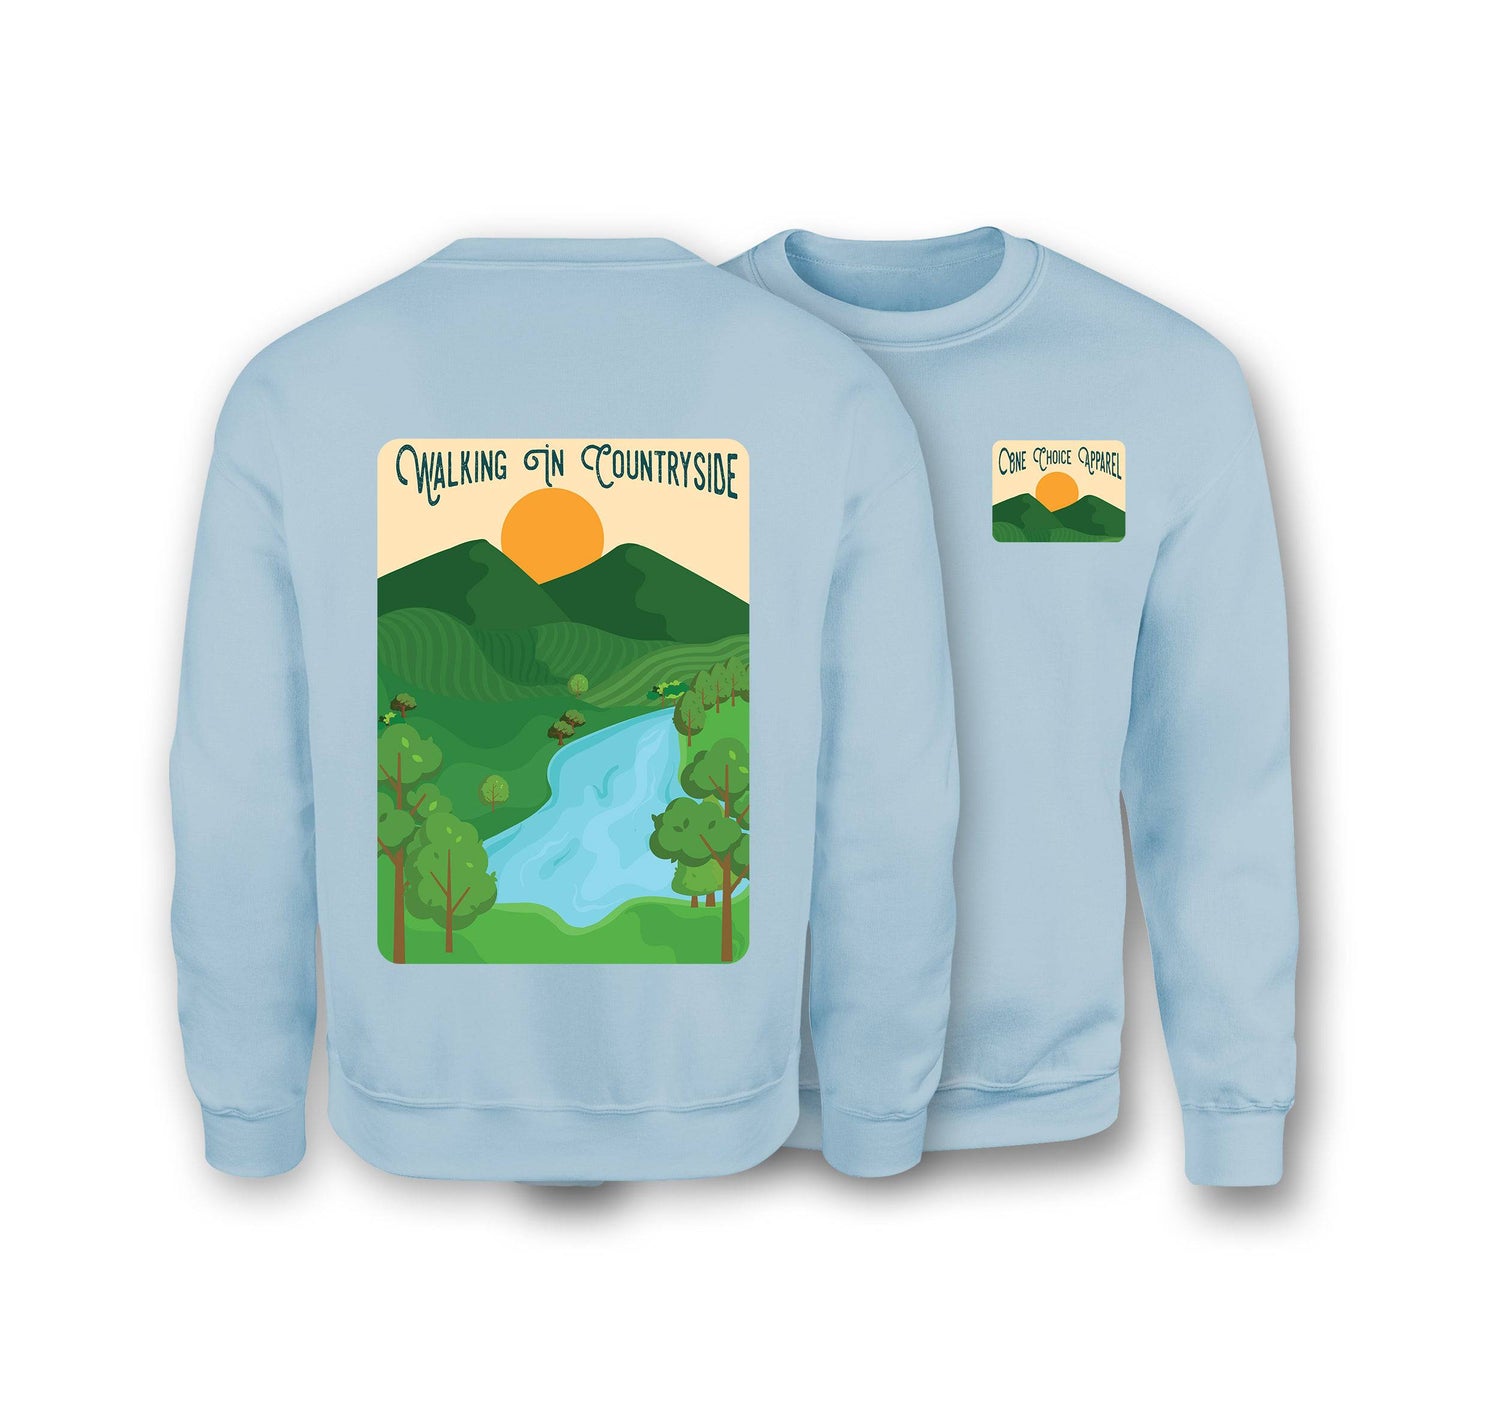 Walking In Countryside Sweatshirt - Organic Cotton Sweatshirt - One Choice Apparel